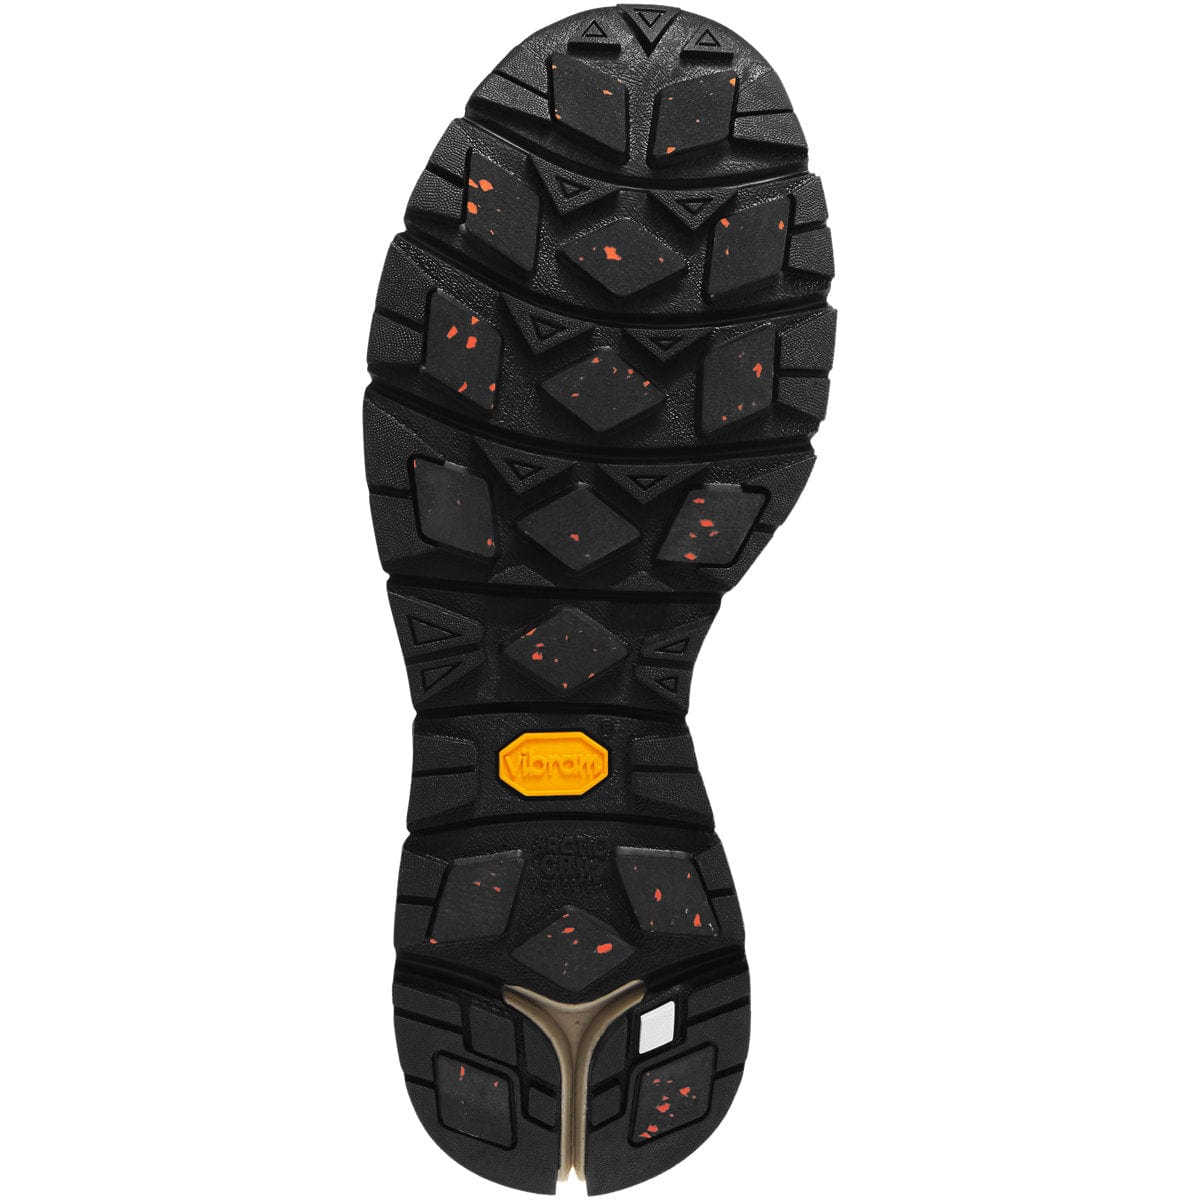 Danner Danner Womens Arctic 600 Side-Zip 7" 200G Hiking Boot Footwear